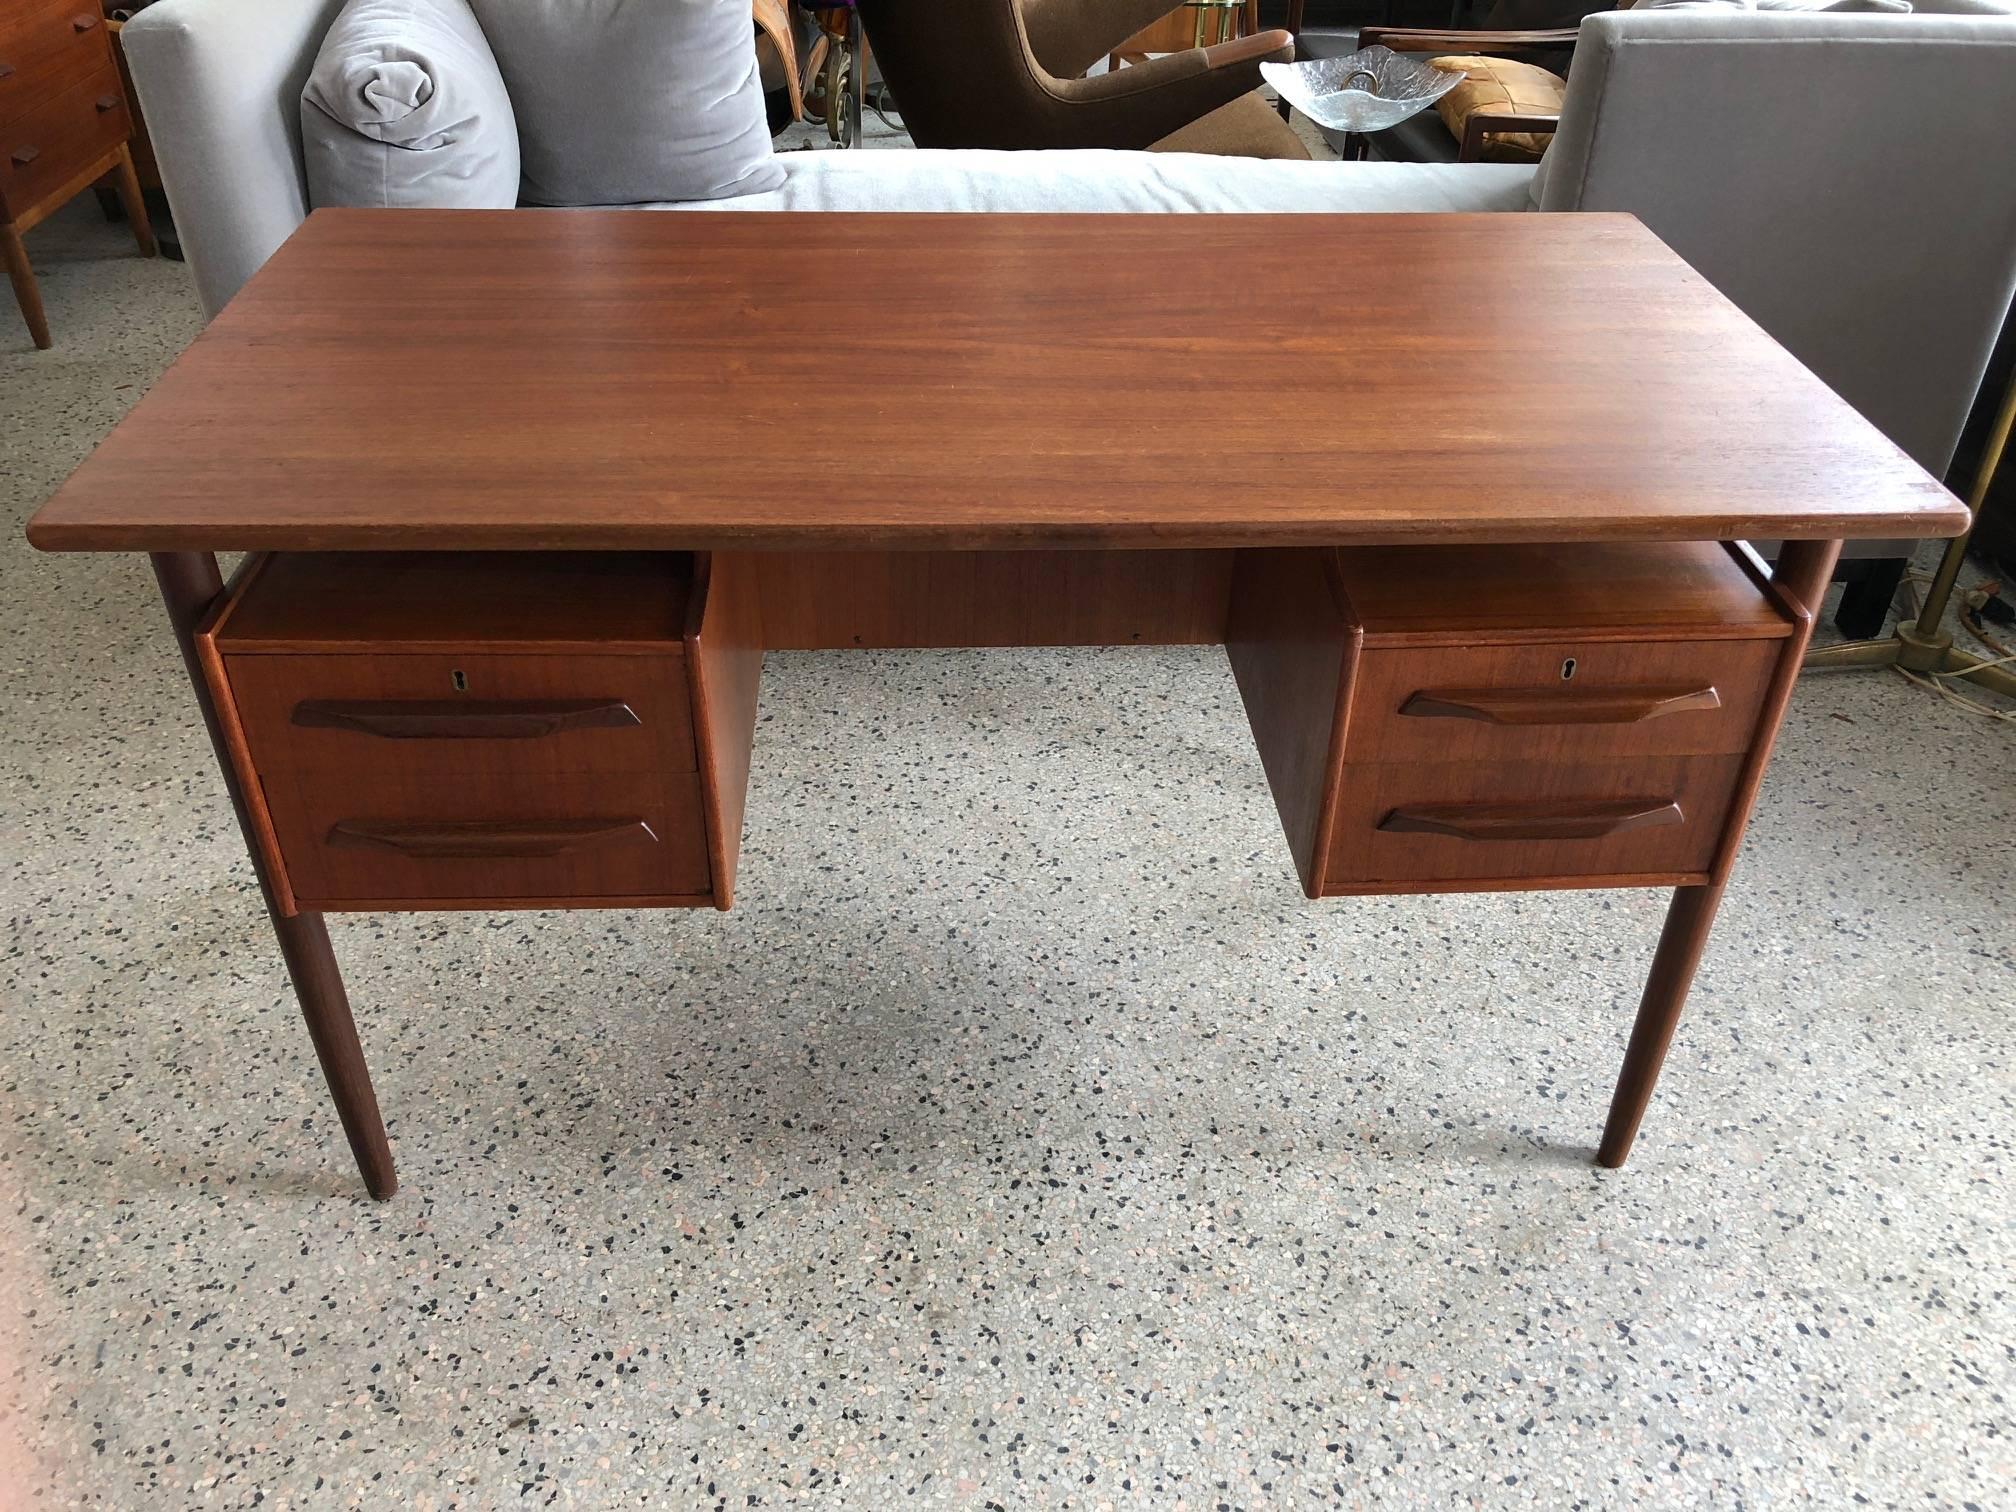 A Classic Danish midcentury desk. Floating top, teak wood, signed Pedersen. Versatile size- 26